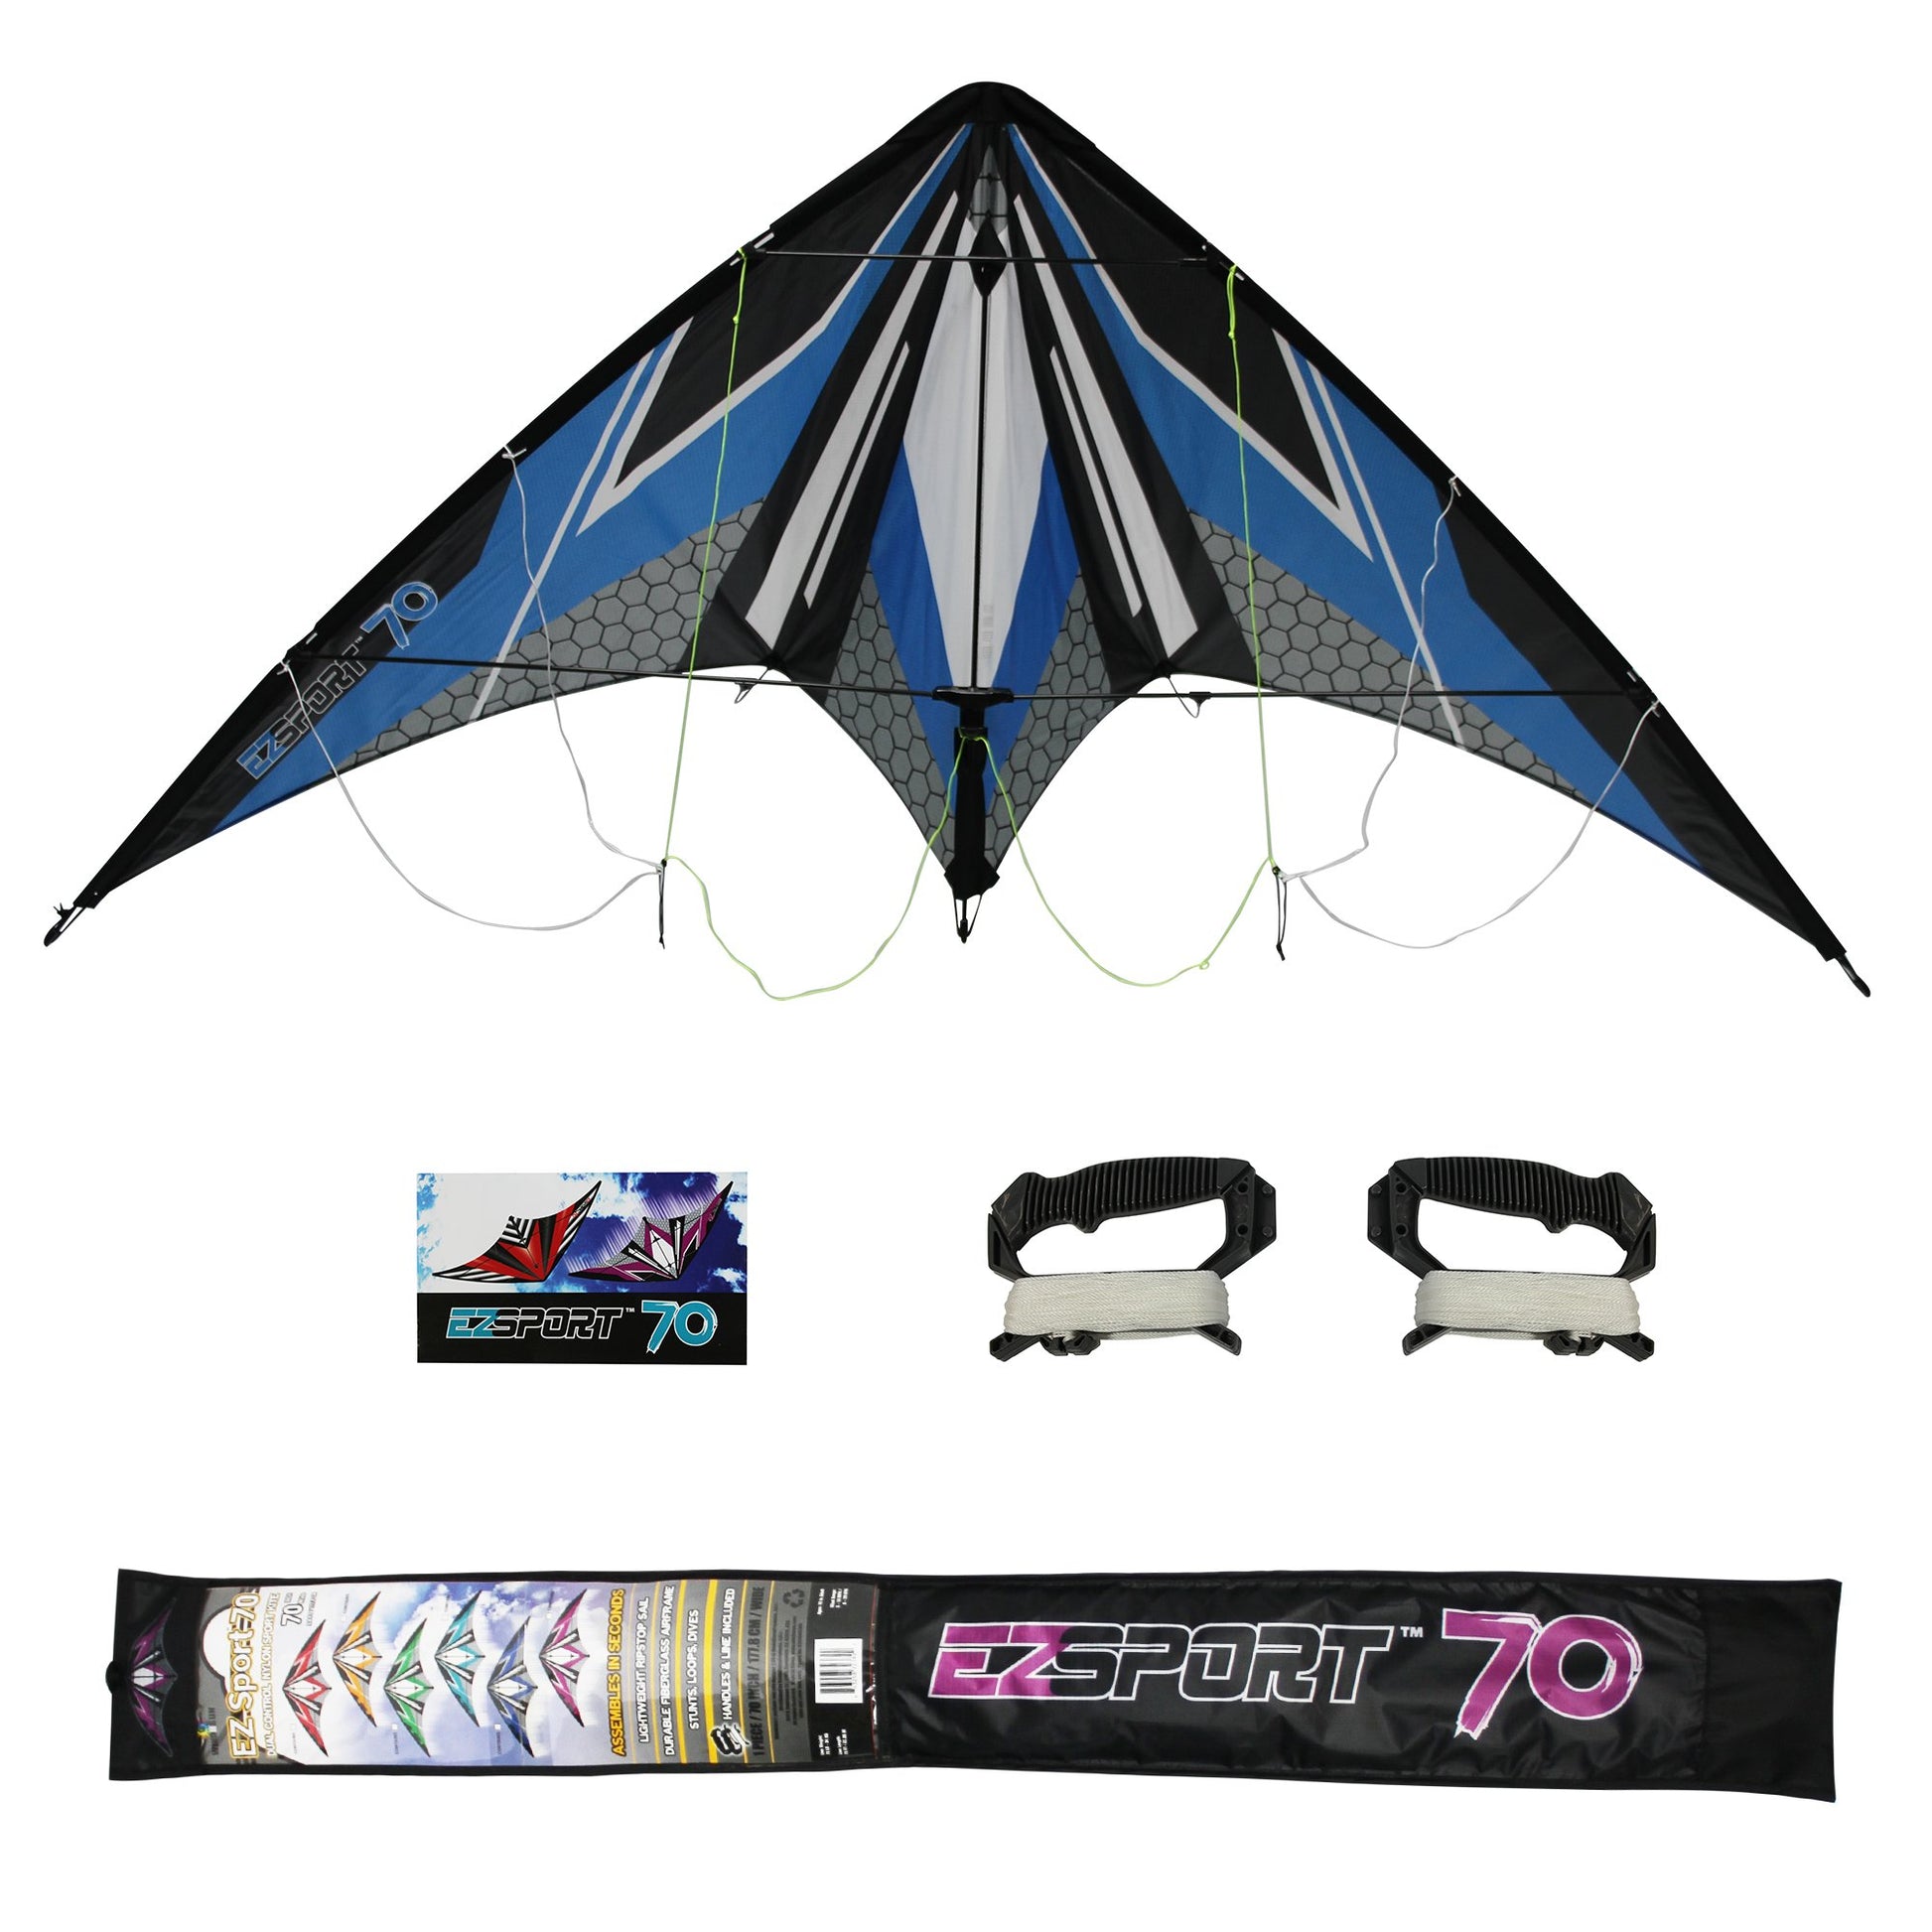 WindNSun EZ Sport 70 Dual Control Sport Kite Blue Hexagon Nylon Kite photo showing handle